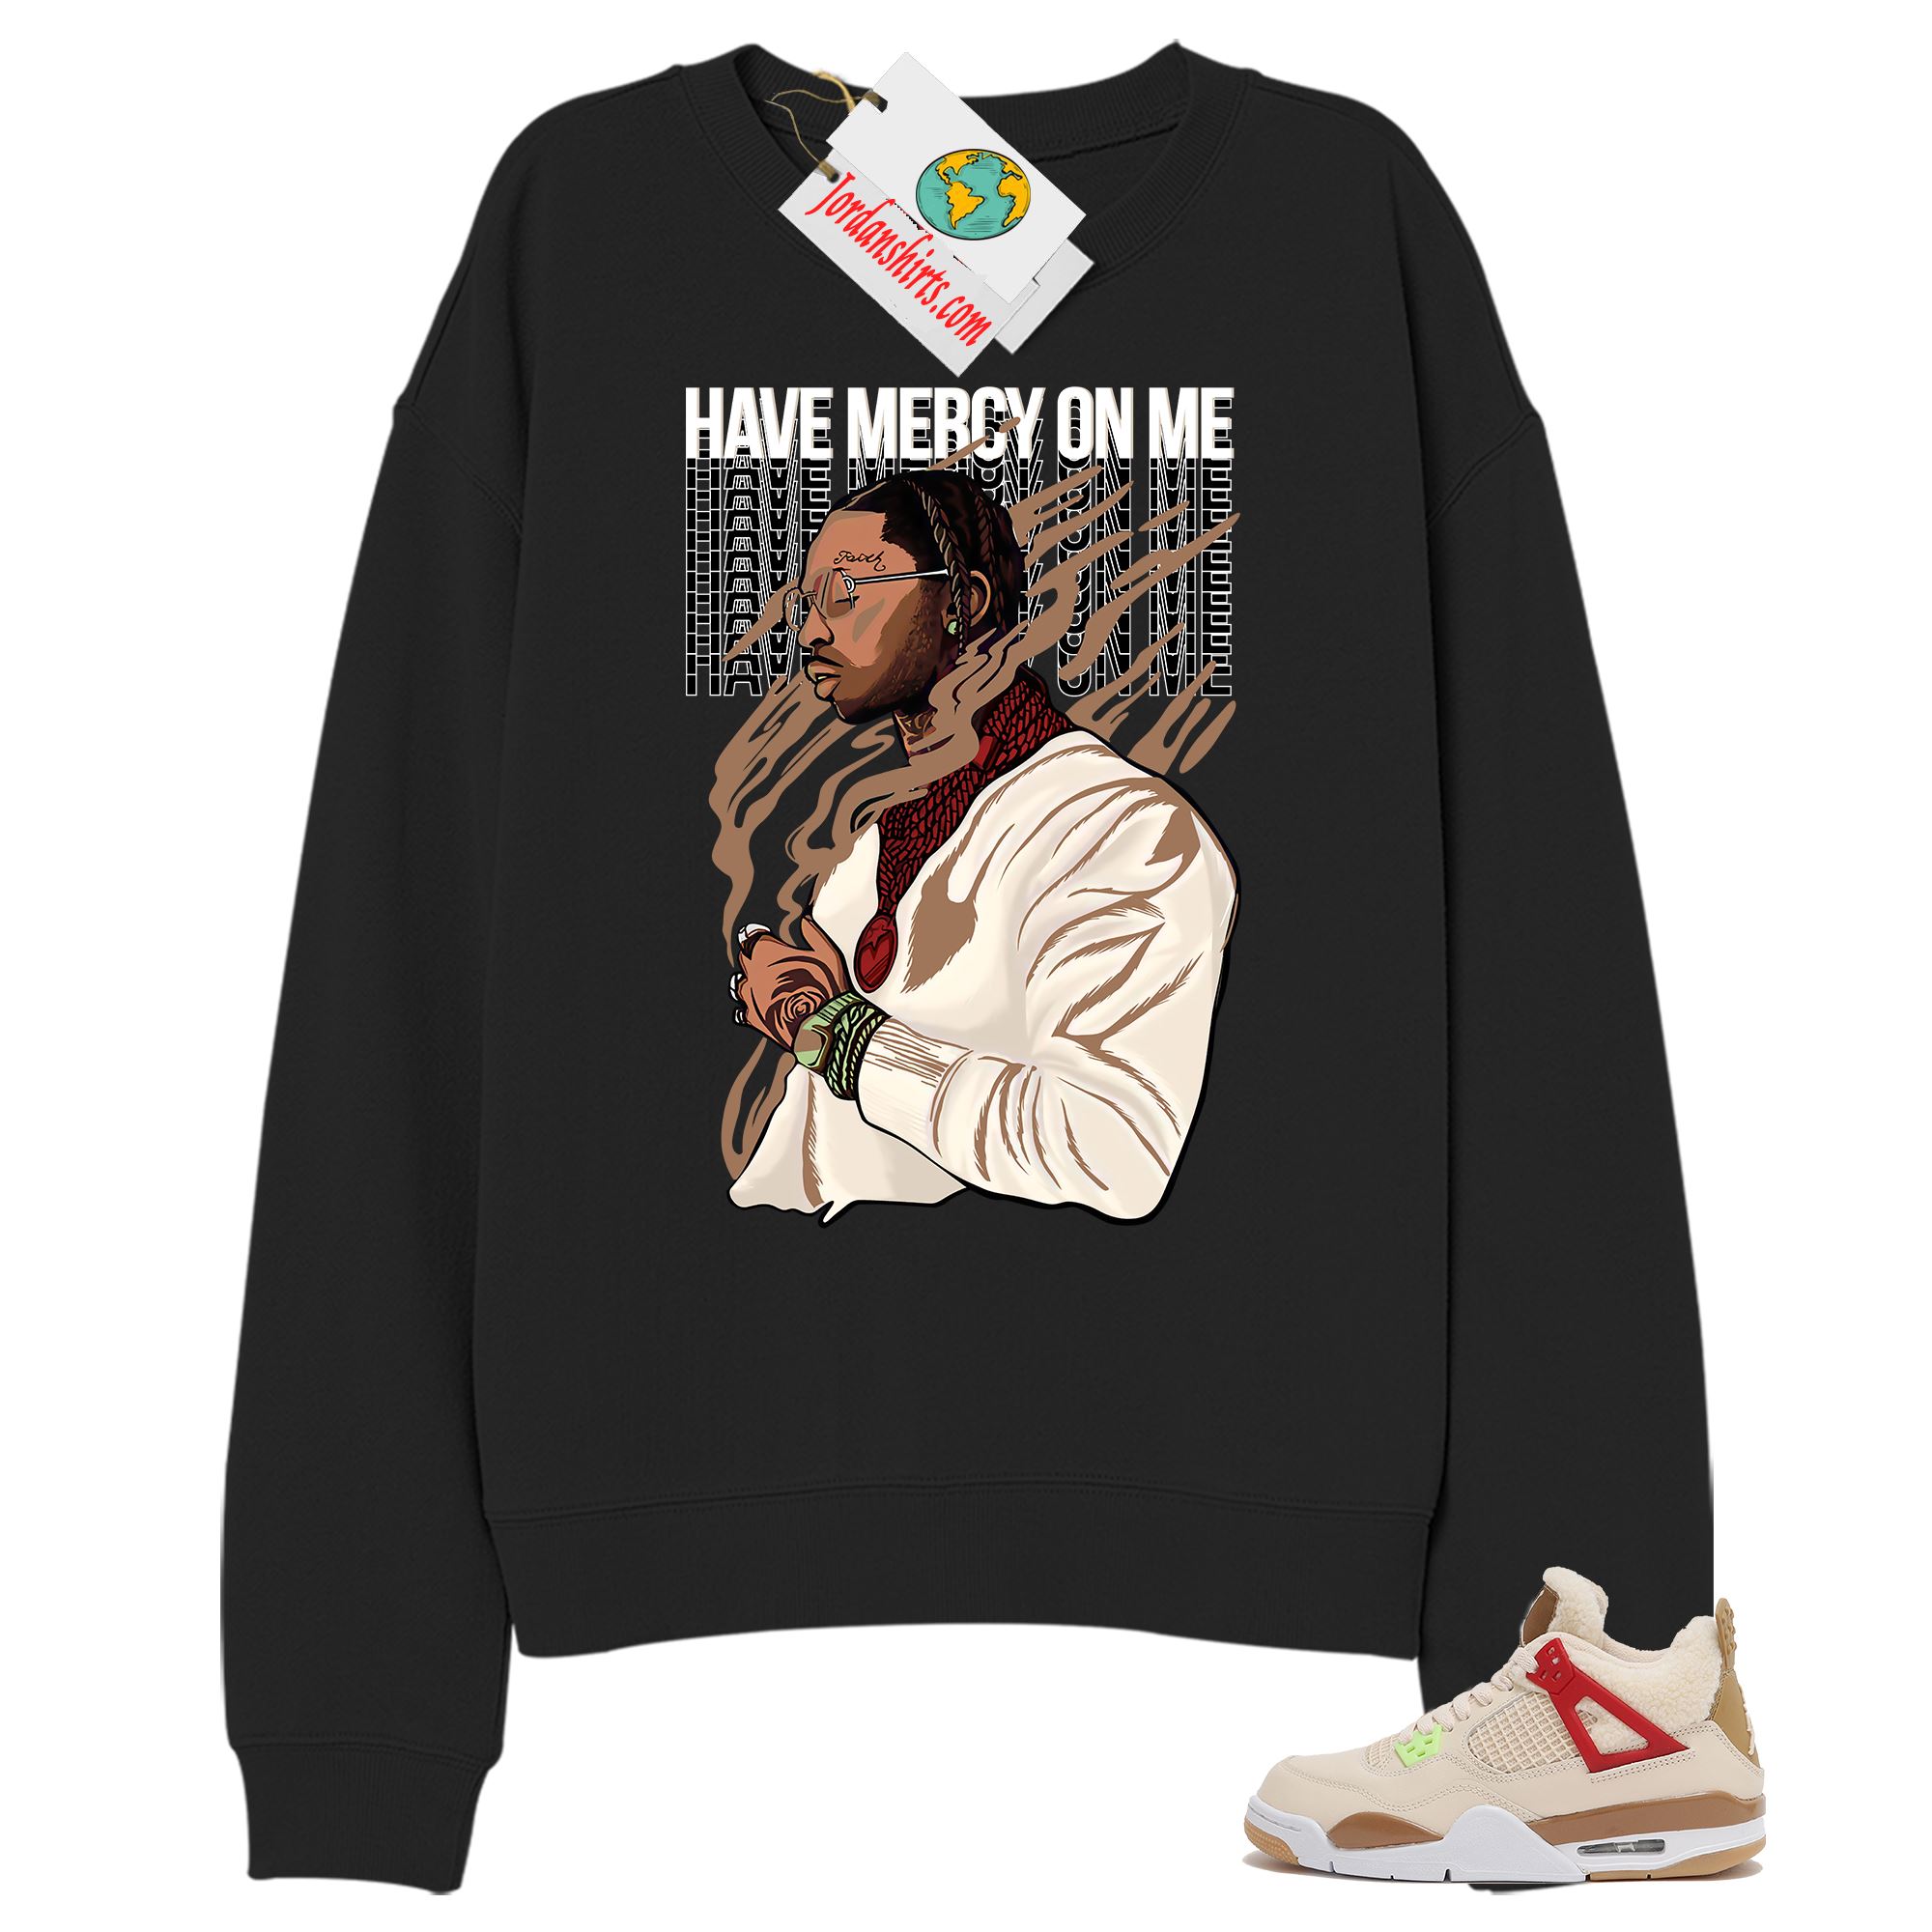 Jordan 4 Sweatshirt, Have Mercy On Me Black Sweatshirt Air Jordan 4 Wild Things 4s Full Size Up To 5xl